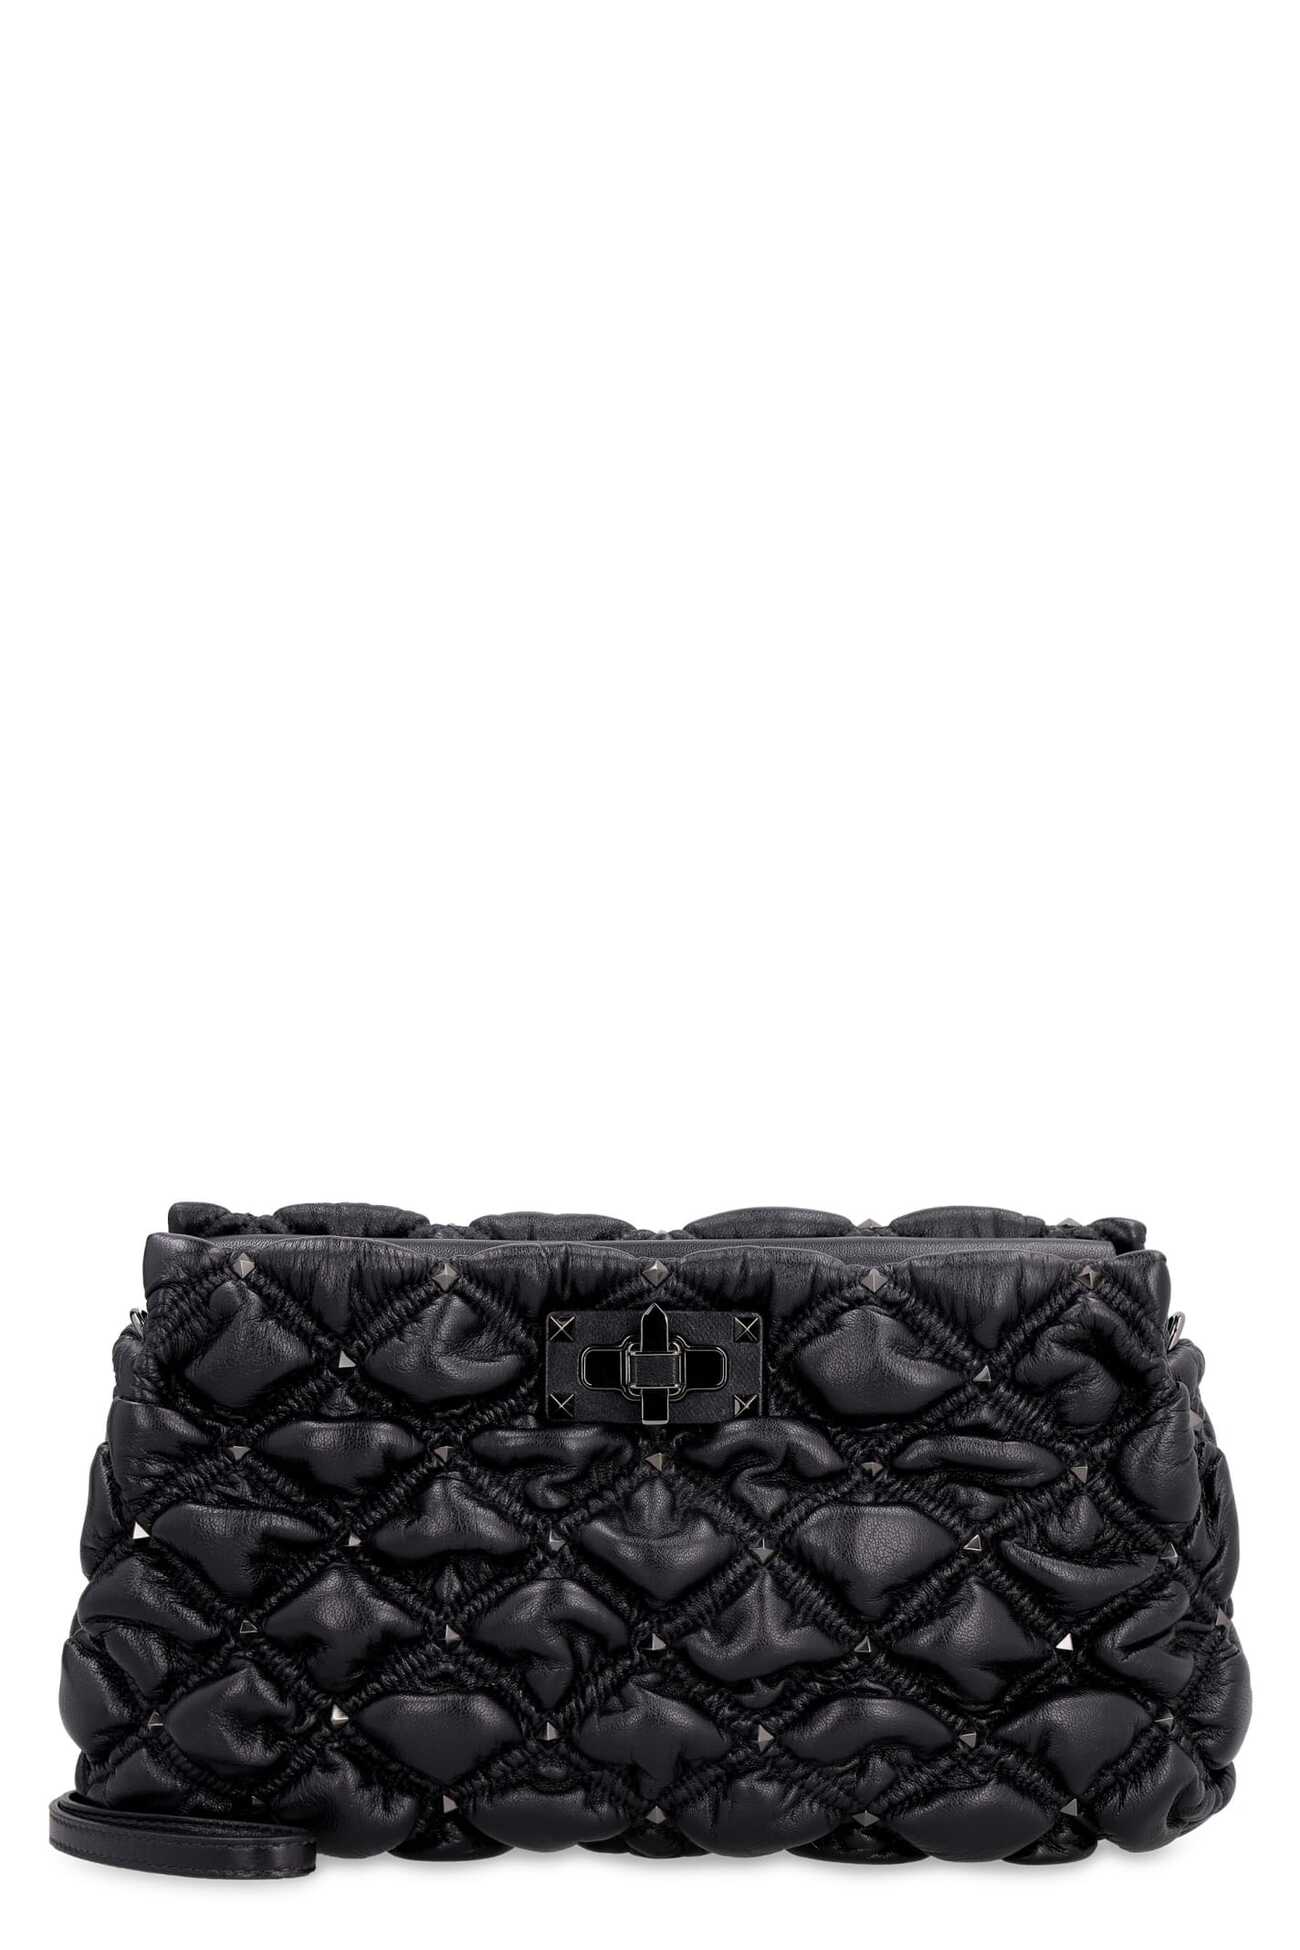 Valentino Garavani - Spikeme Leather Crossbody Bag in black